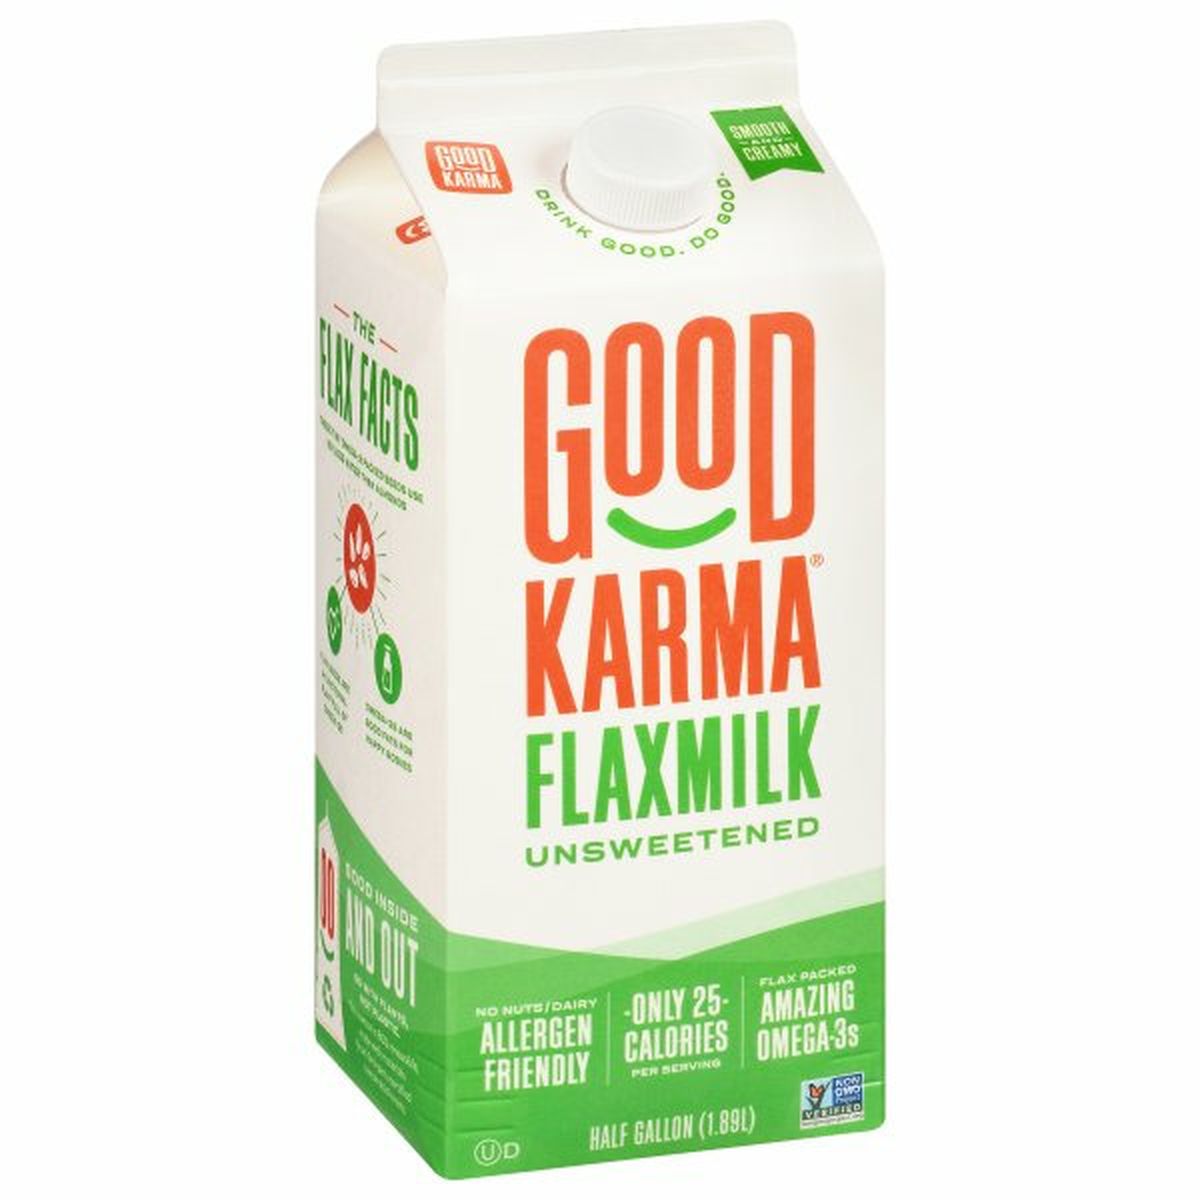 Calories in Good Karma Flaxmilk, Unsweetened